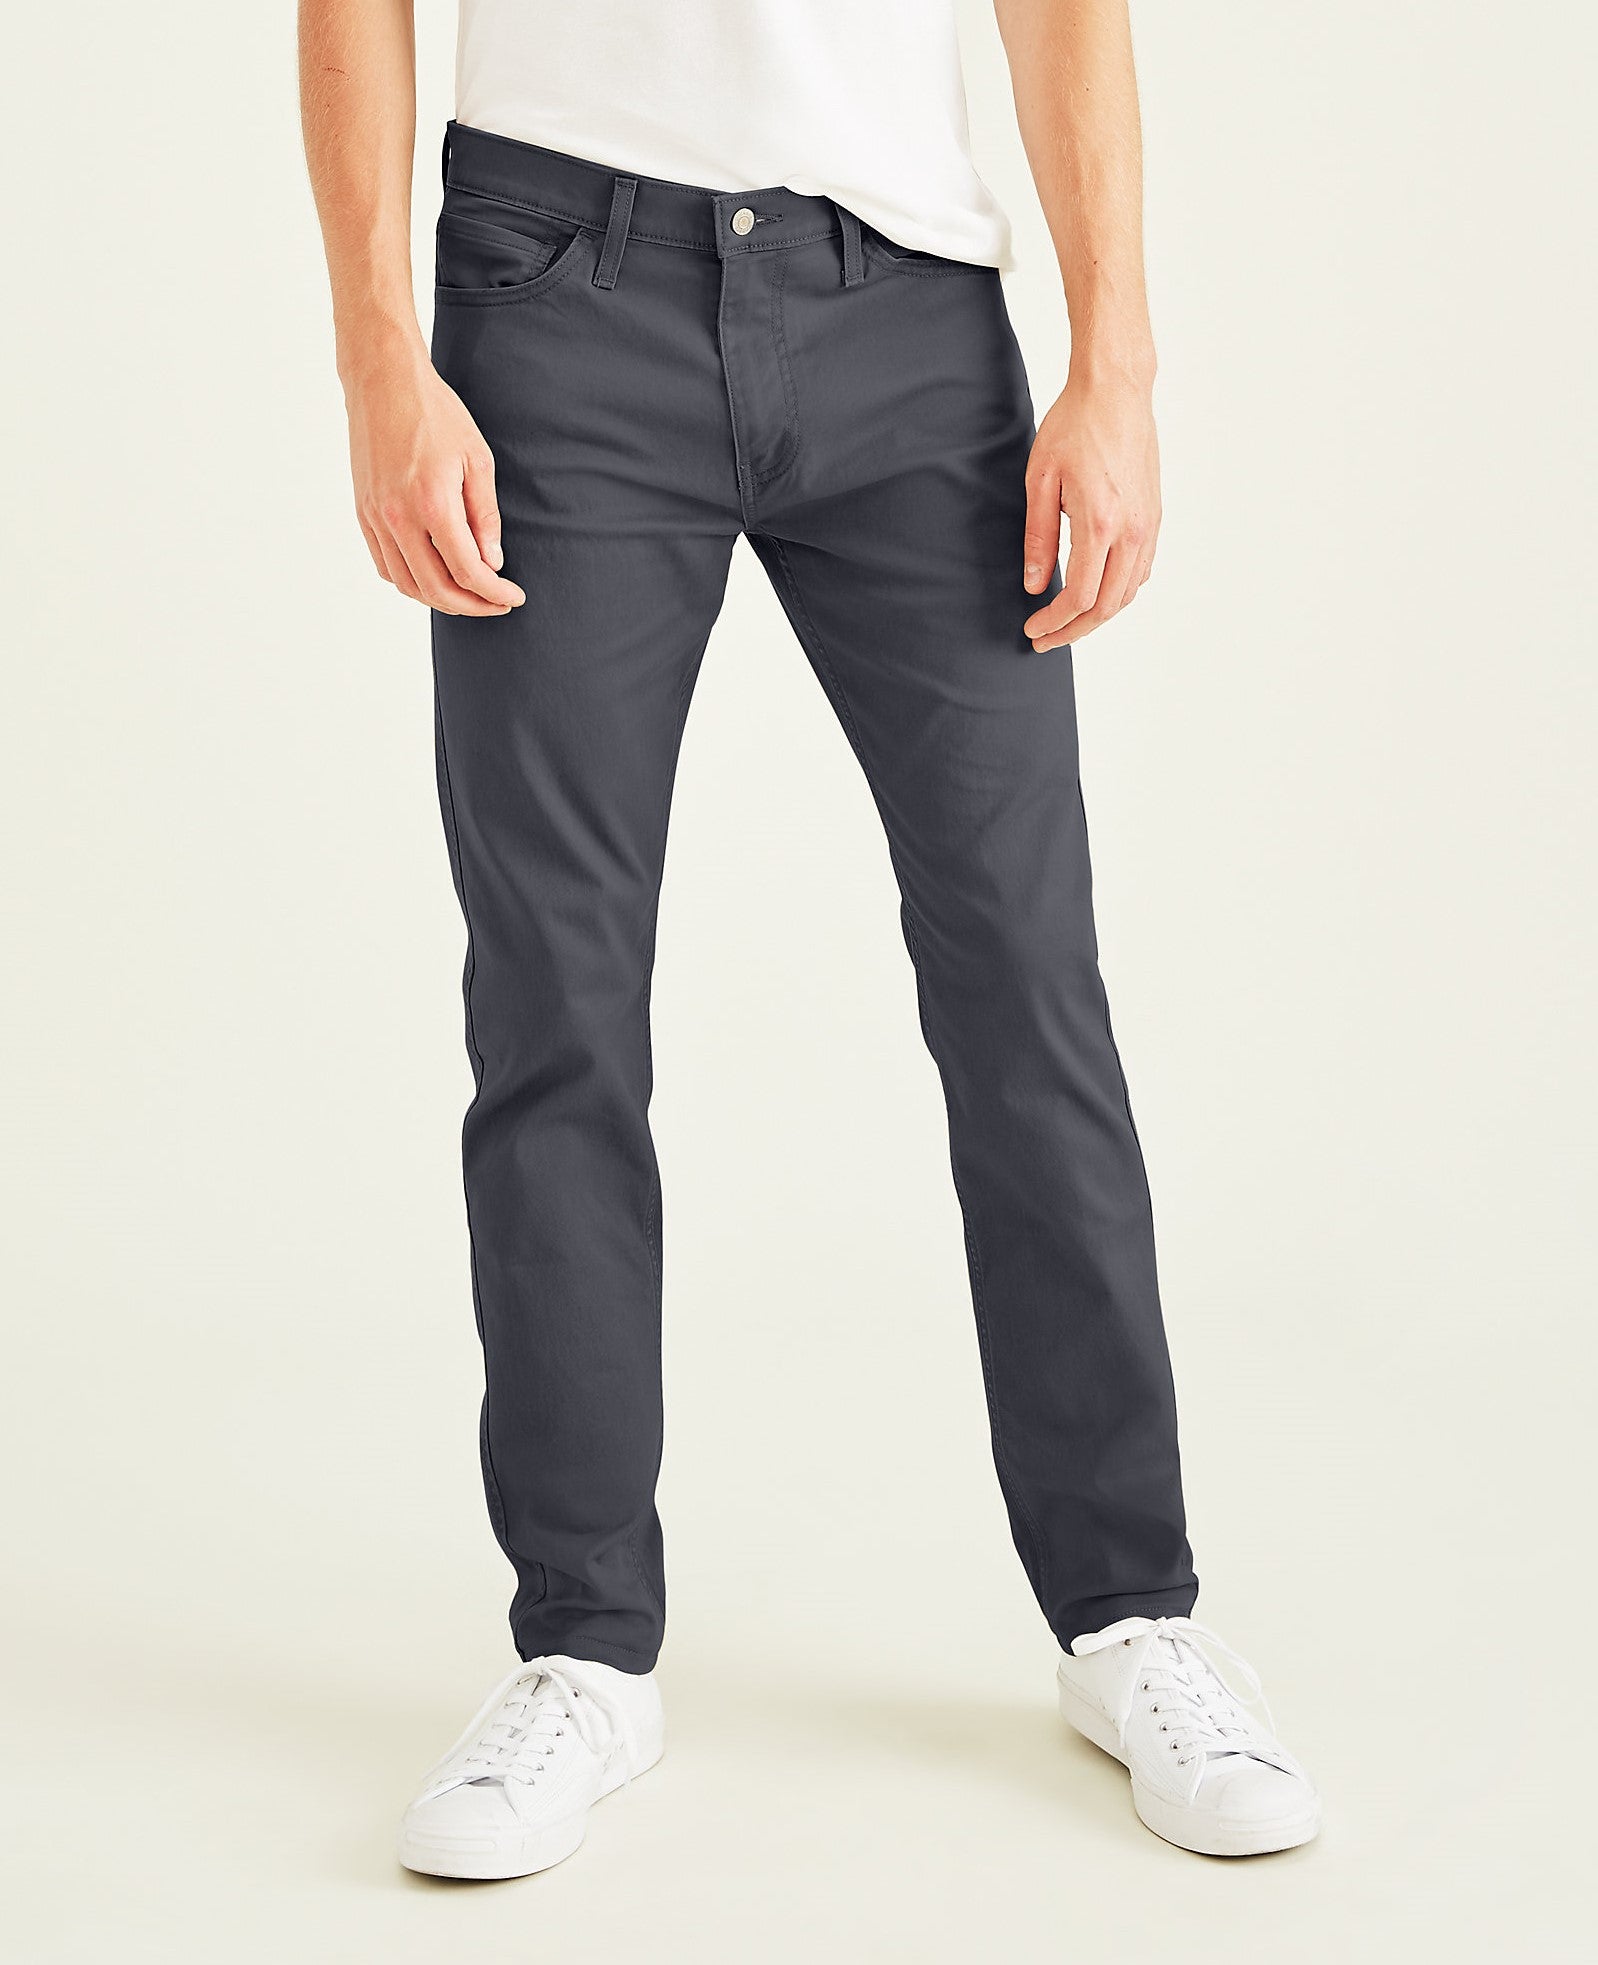 pantalon-jeans-dockers-jean-cut-p-caballeros